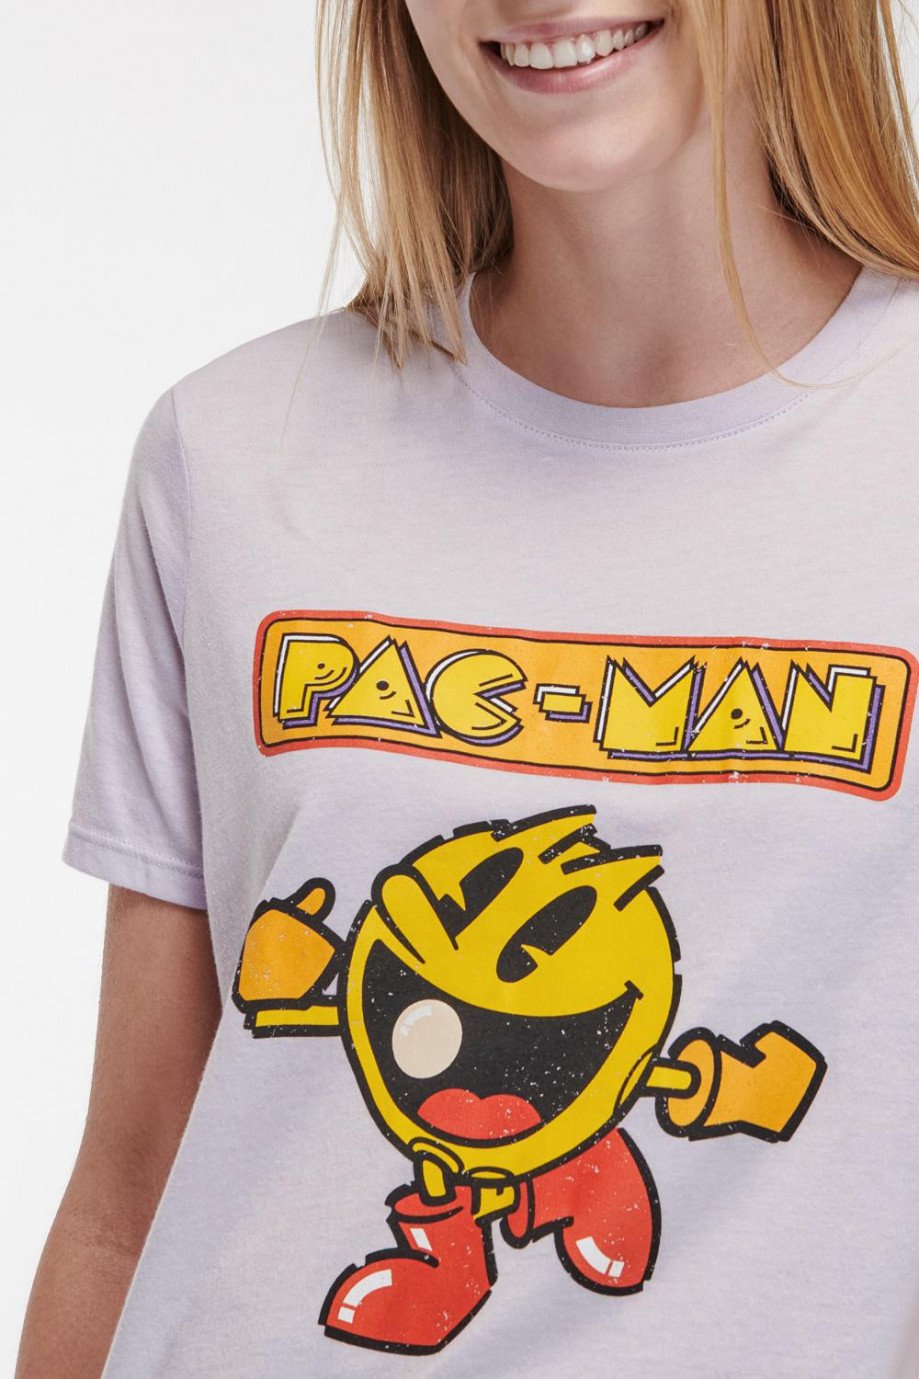 Camiseta, manga corta, estampada en frente y manga de Pacman.